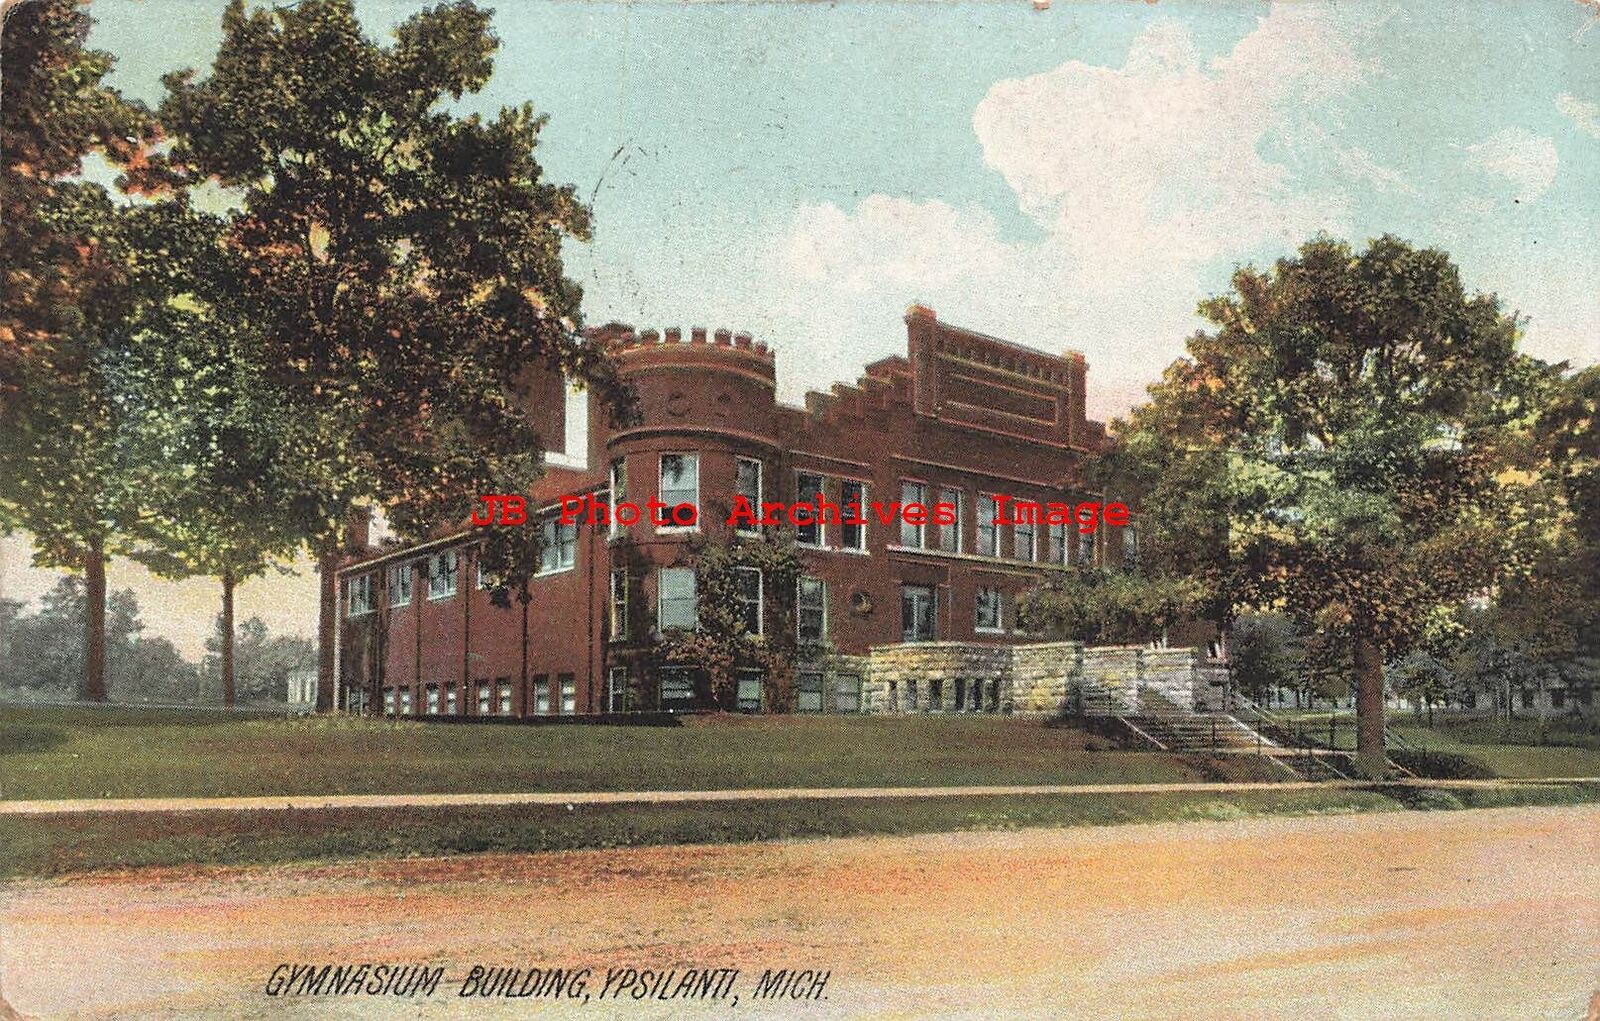 MI, Ypsilanti, Michigan, Gymnasium Building, 1908 PM, Rotograph No 63707